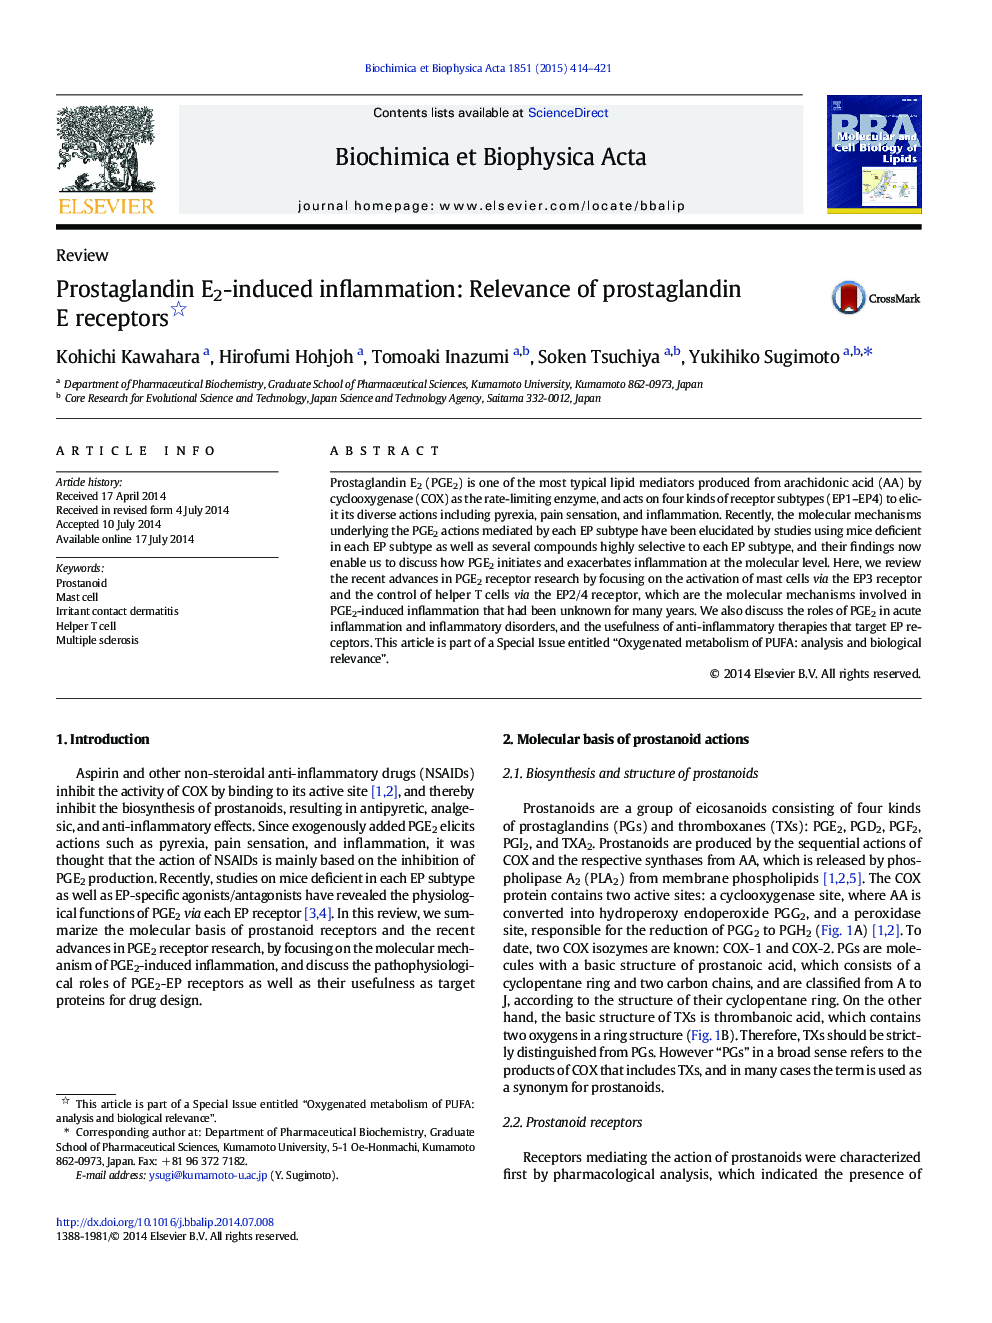 Prostaglandin E2-induced inflammation: Relevance of prostaglandin E receptors 